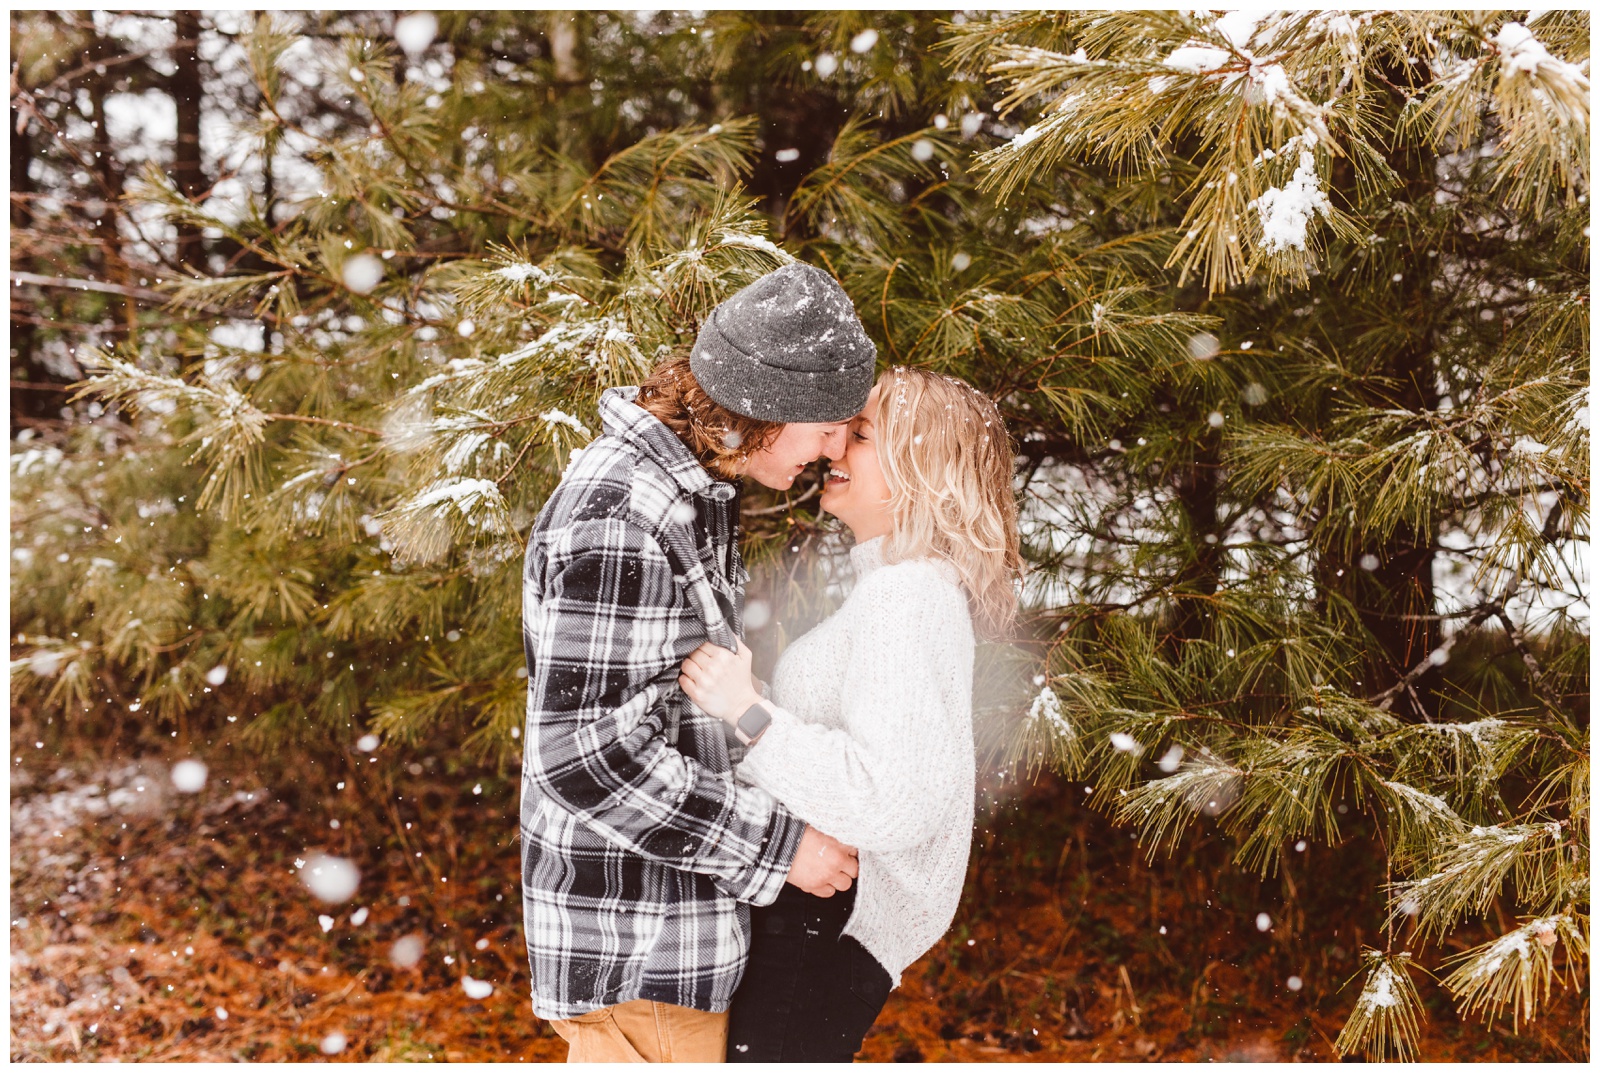 Romantic & Playful Snowy Day Engagement Session - Vermont Portrait Photographer - Brooke Michelle Photo